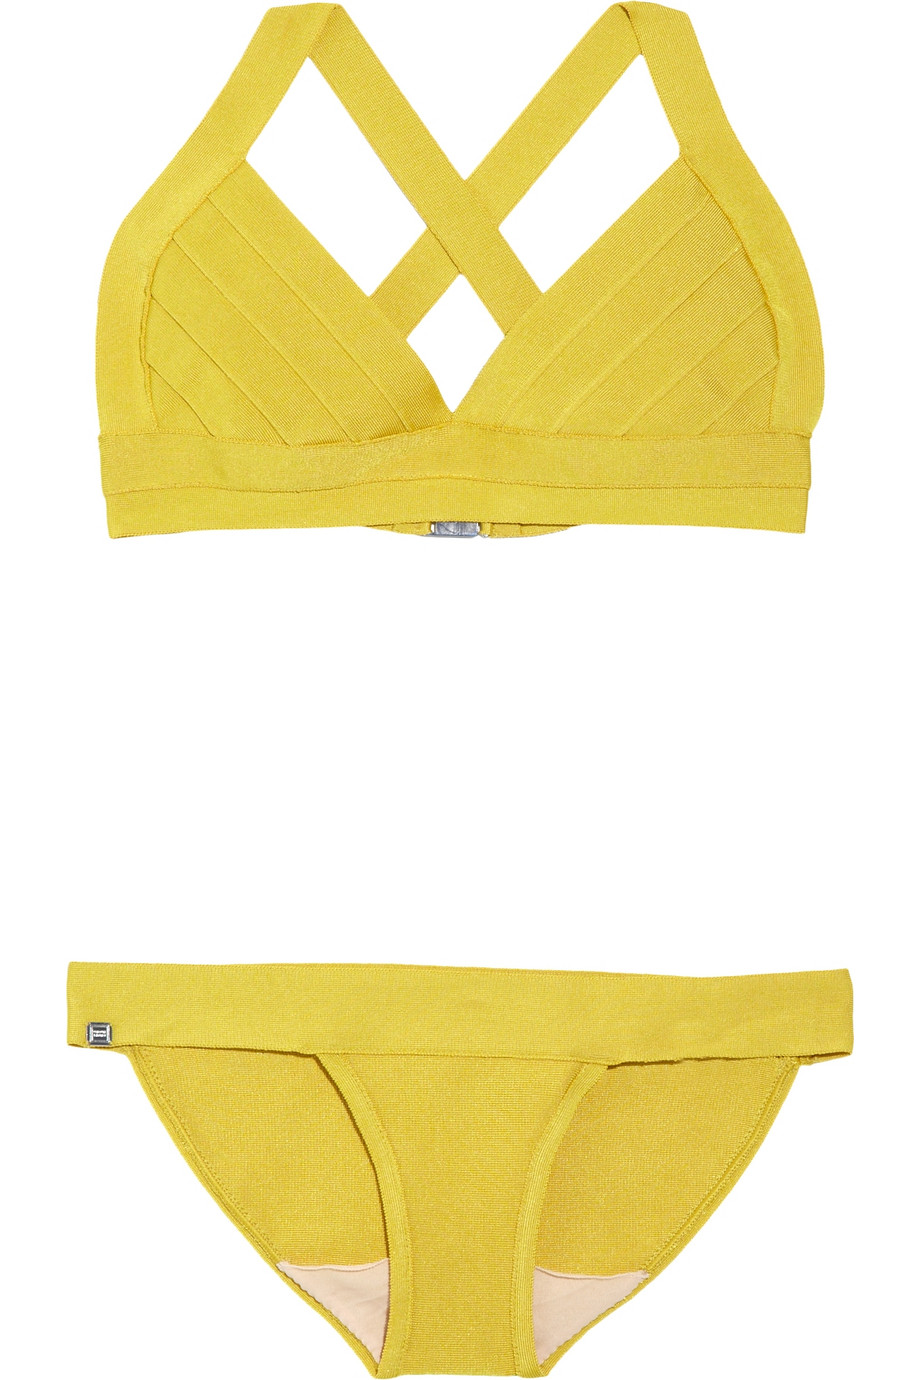 Lyst - Hervé Léger Bandage Bikini in Yellow